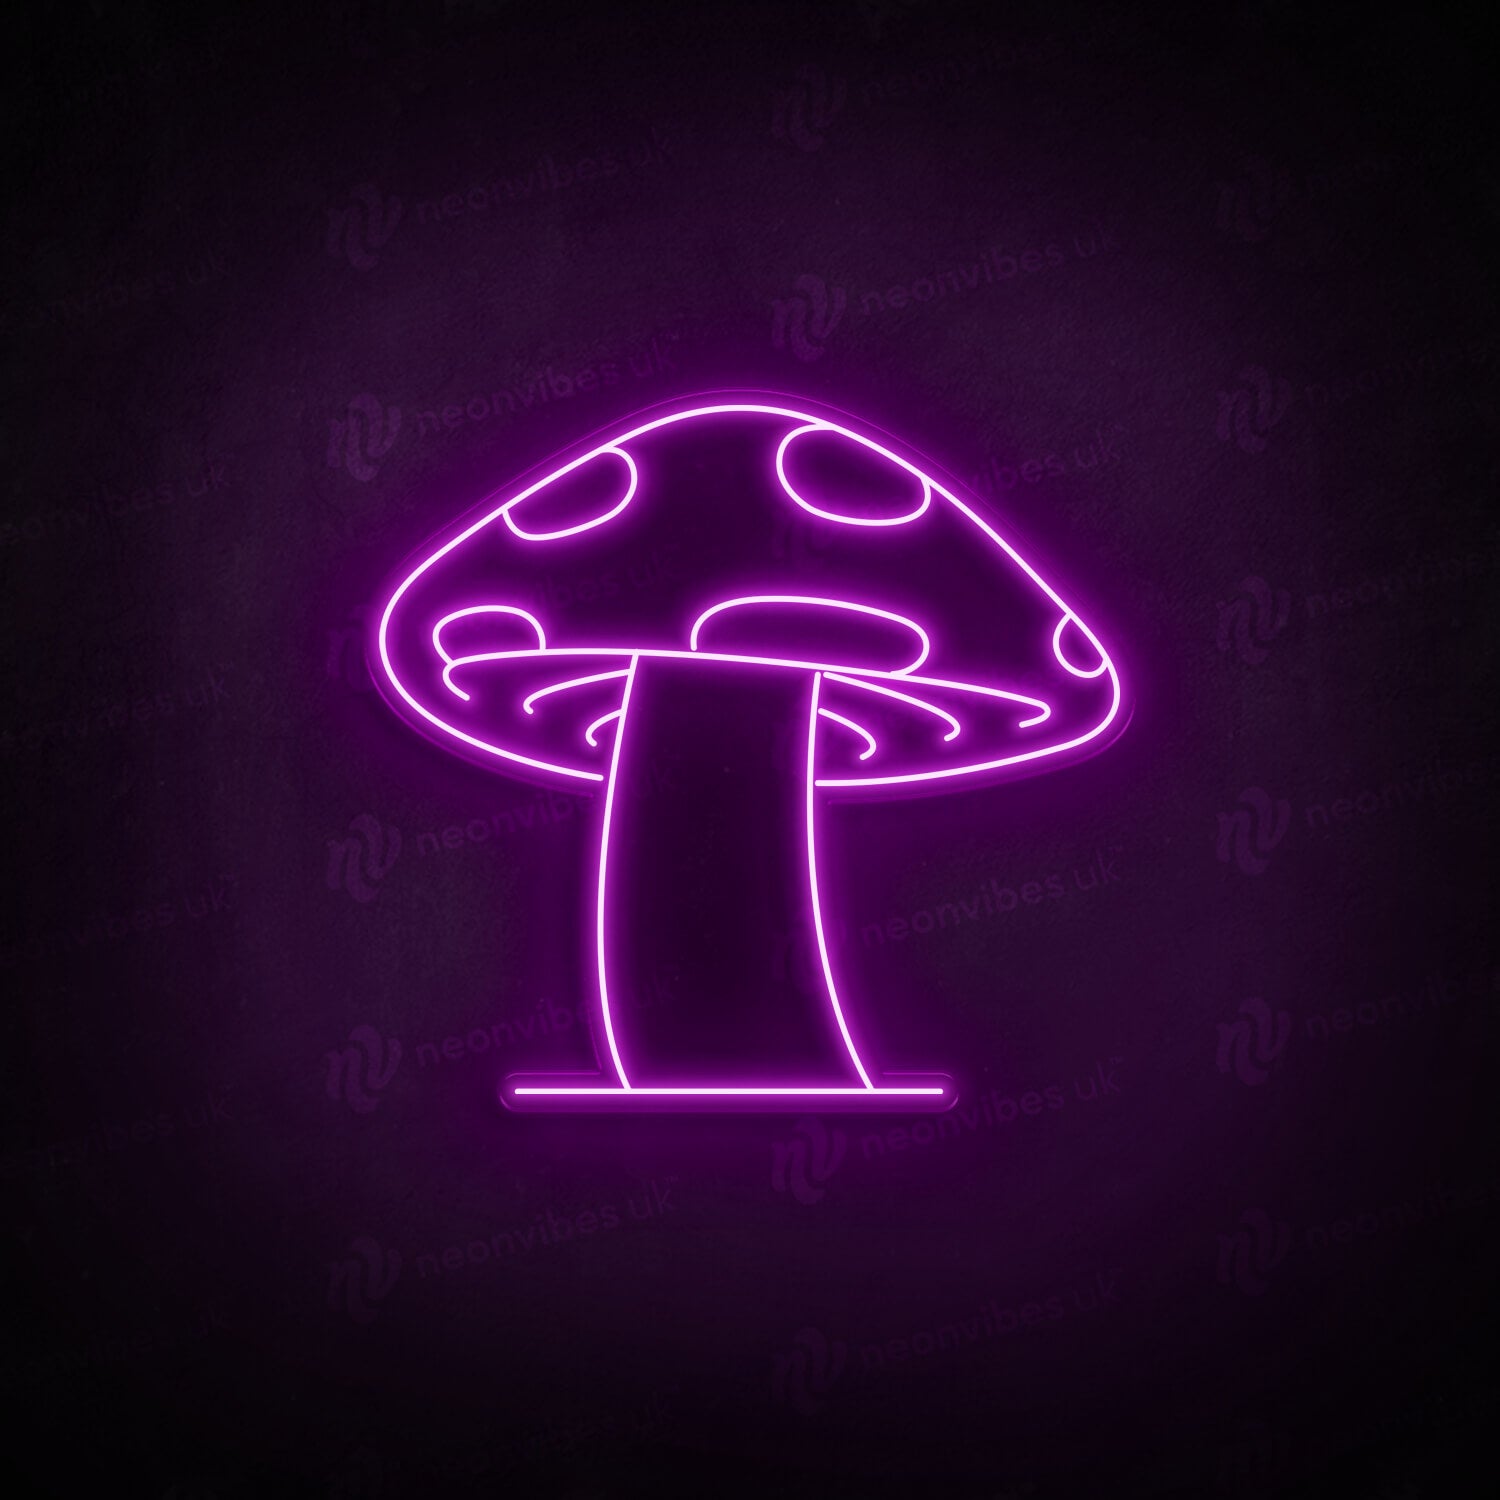 Mushroom neon sign